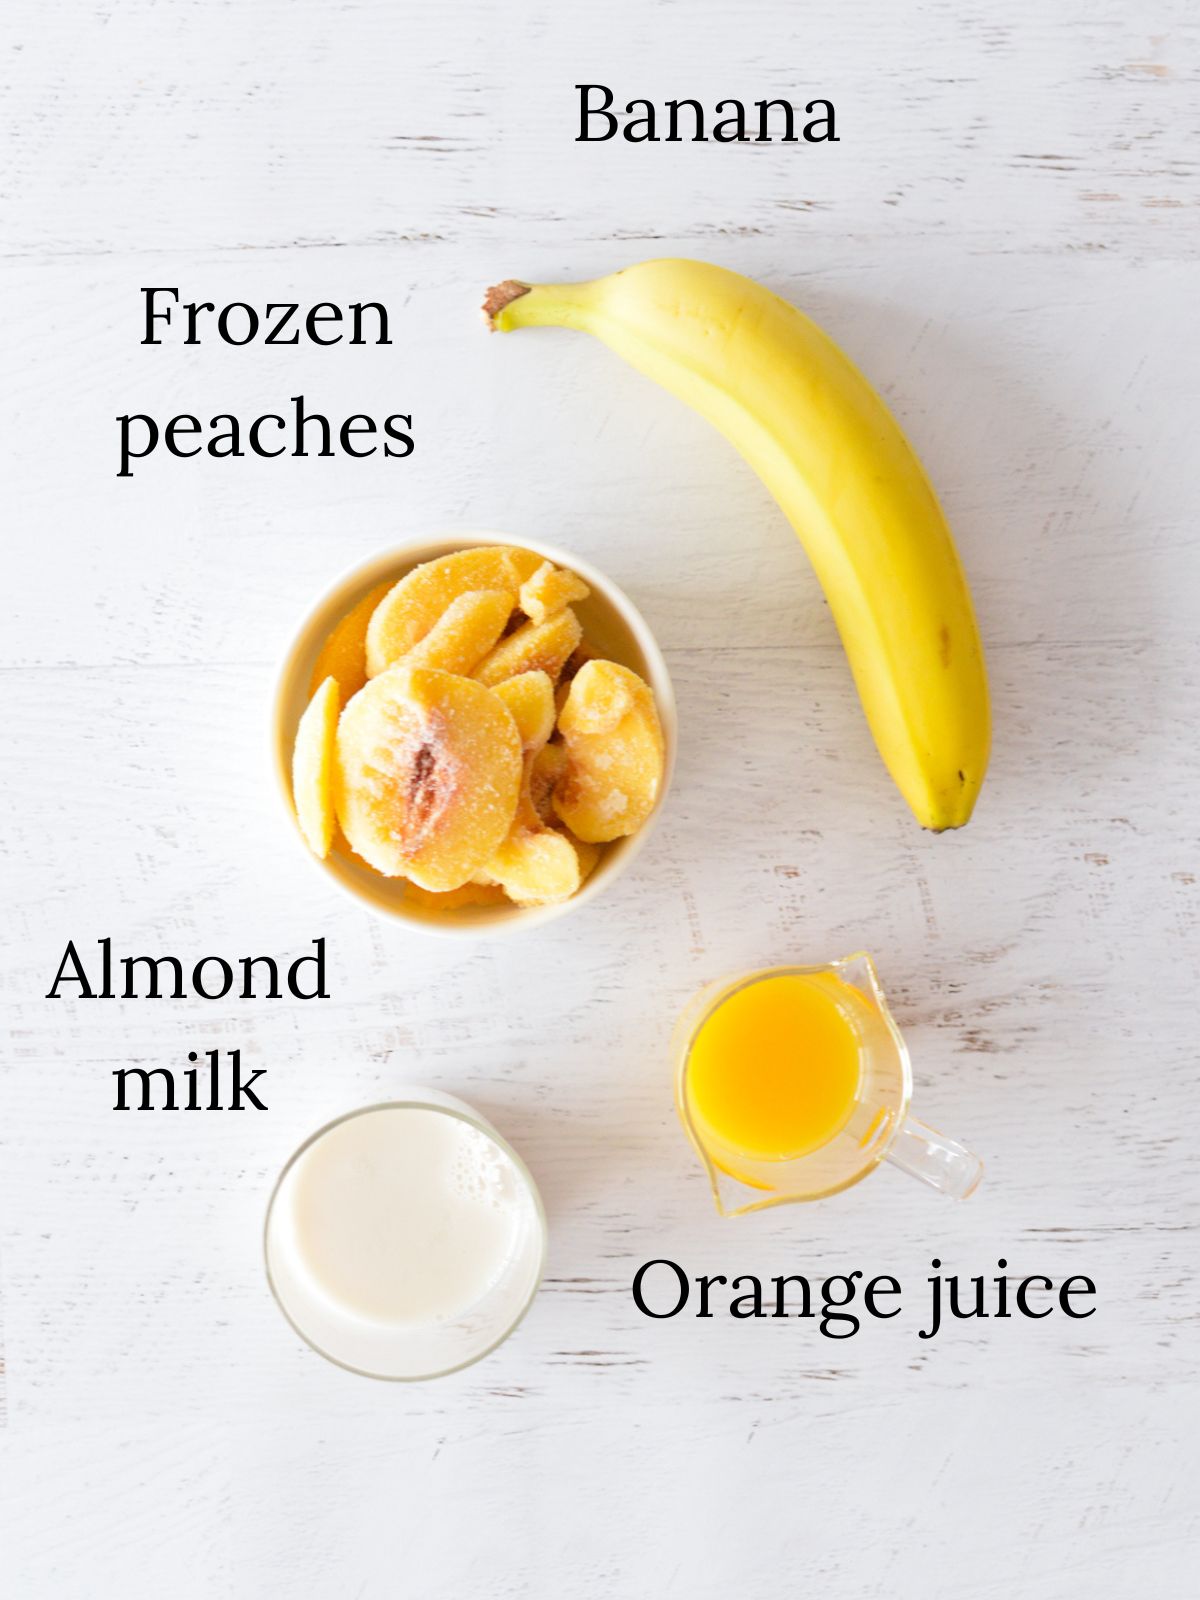 banana, frozen peaches, orange juice, almond milk.